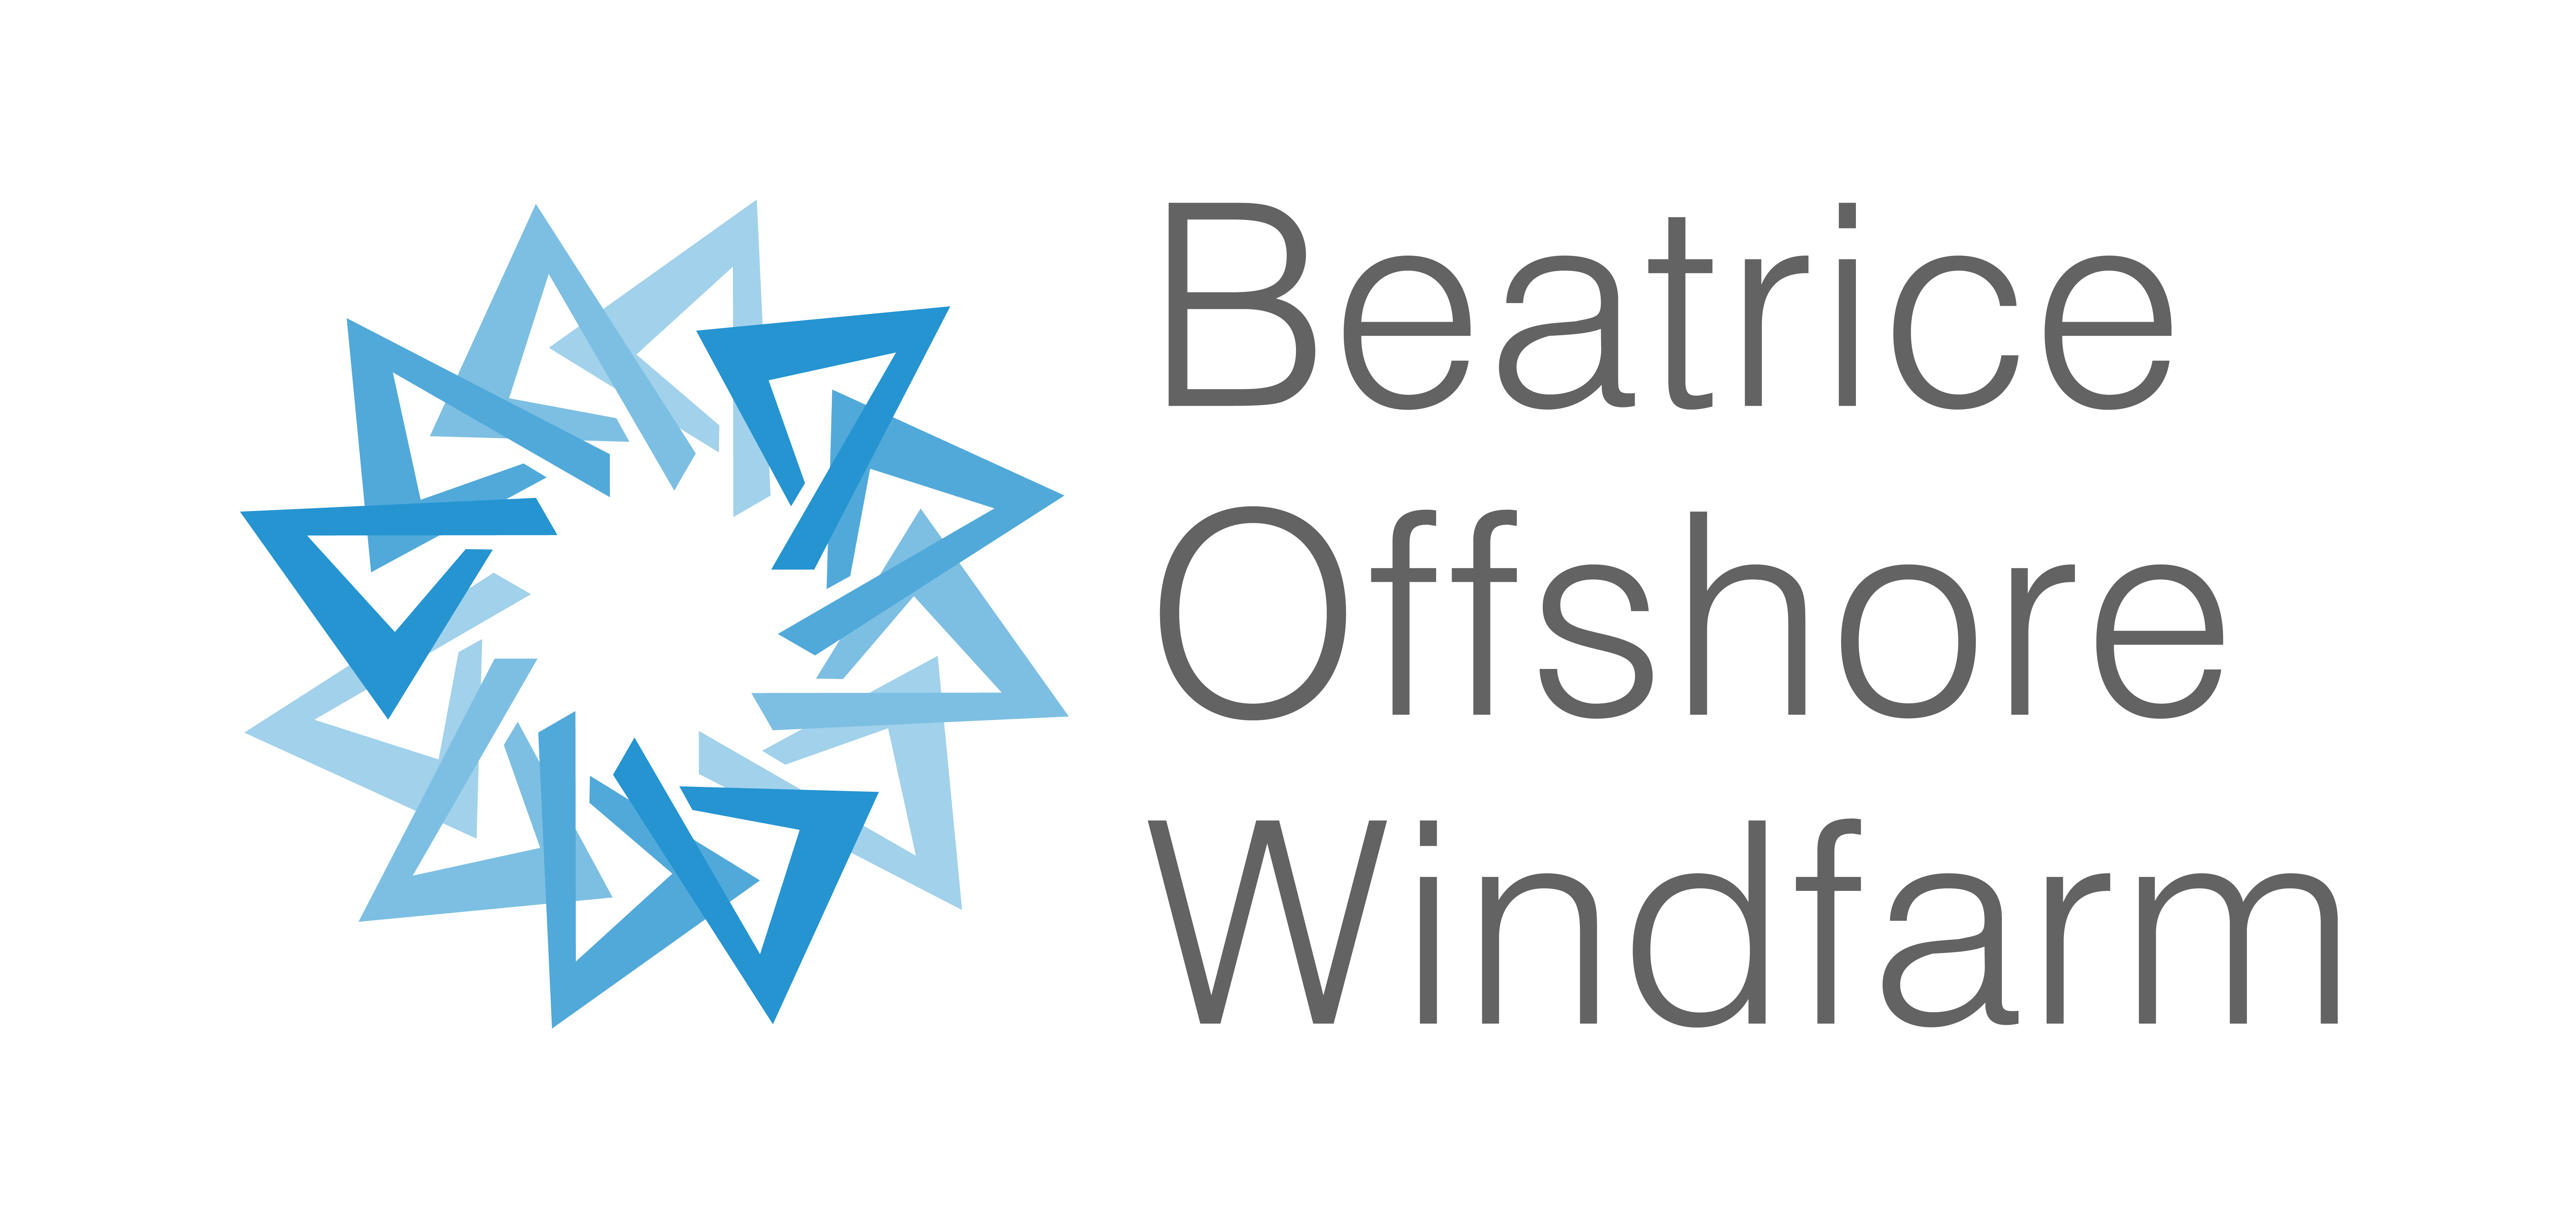 Beatrice Offshore Windfarm logo